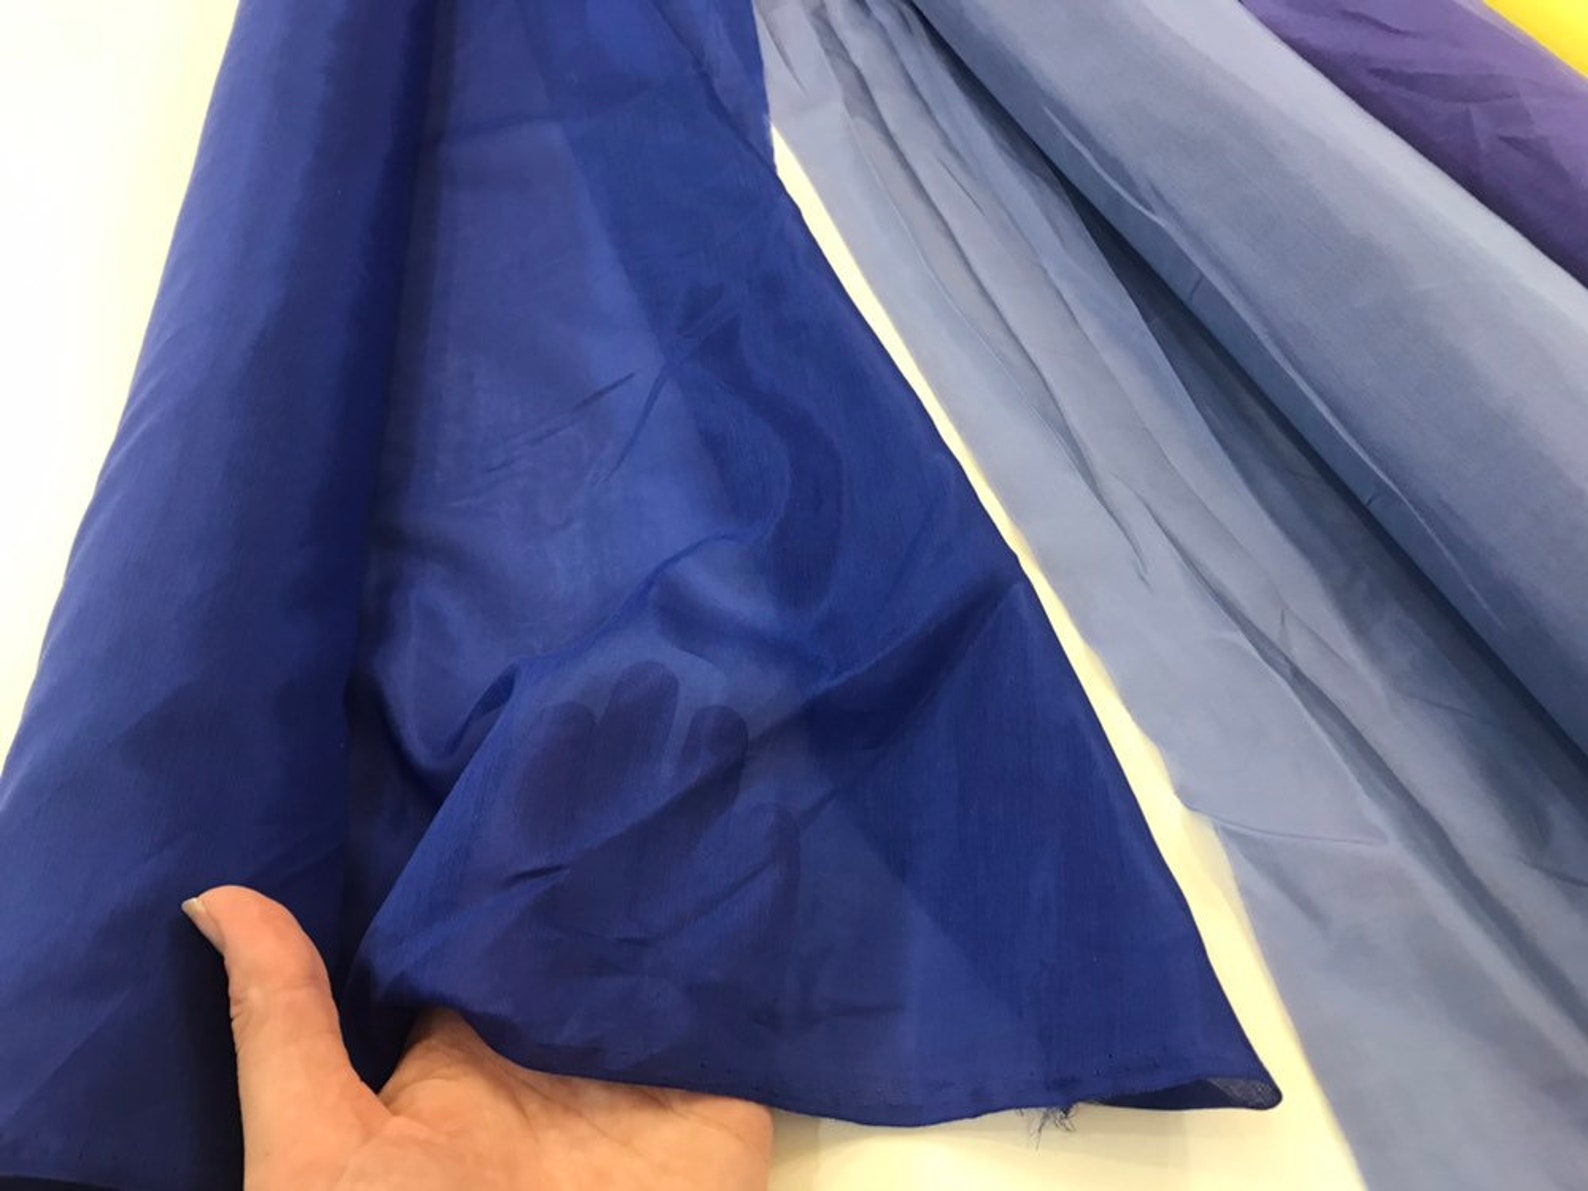 Silk Batiste Fabric. Mulberry Silk Fabric. Lining Fabric. Blue | Etsy